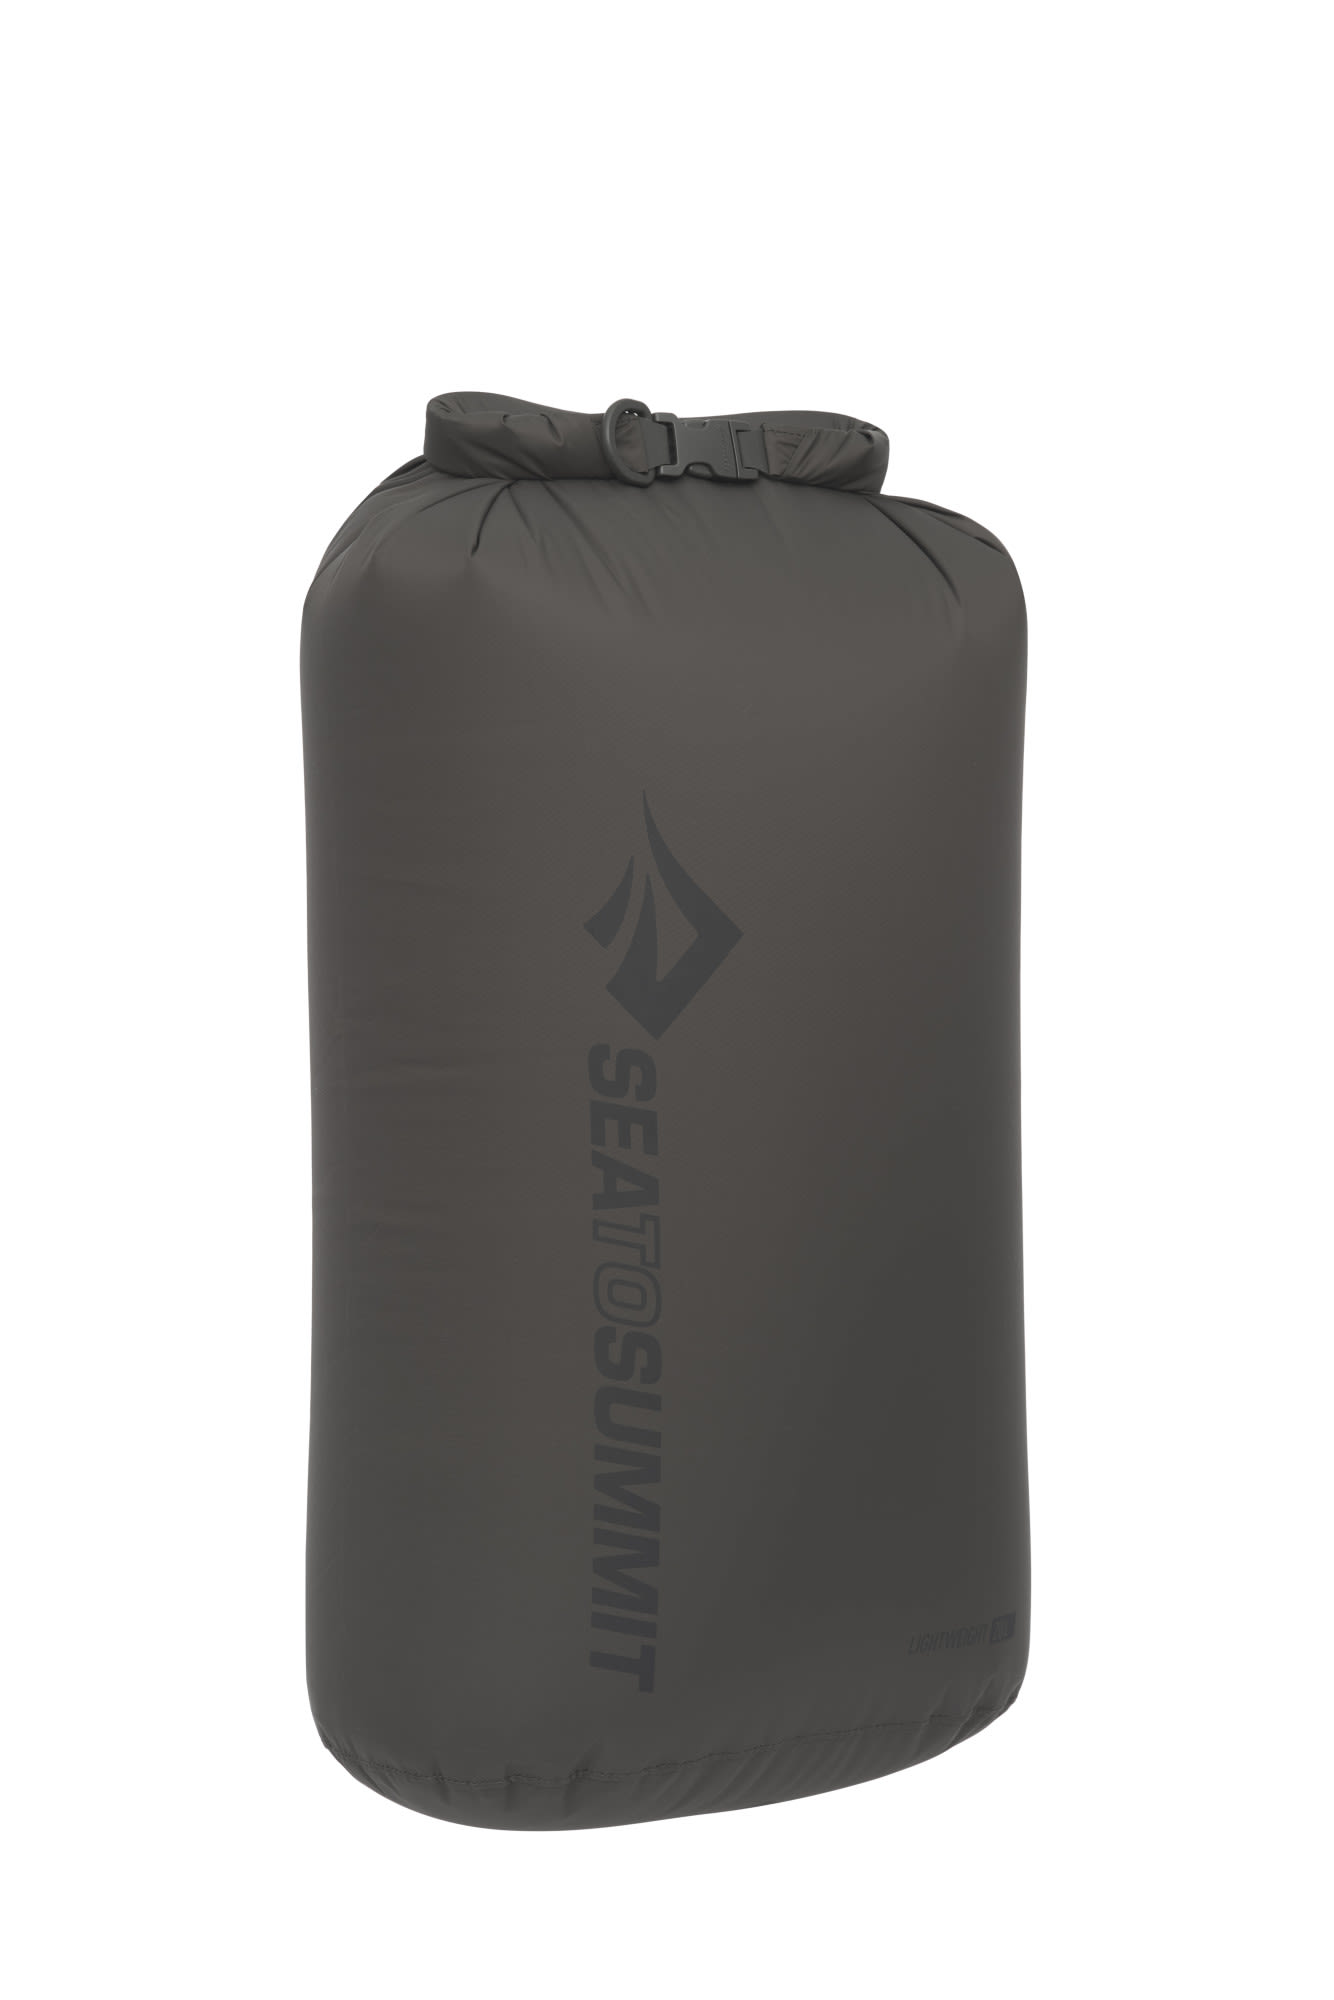 Sea To Summit Lightweight Dry Bag 20l Grau |  Tasche